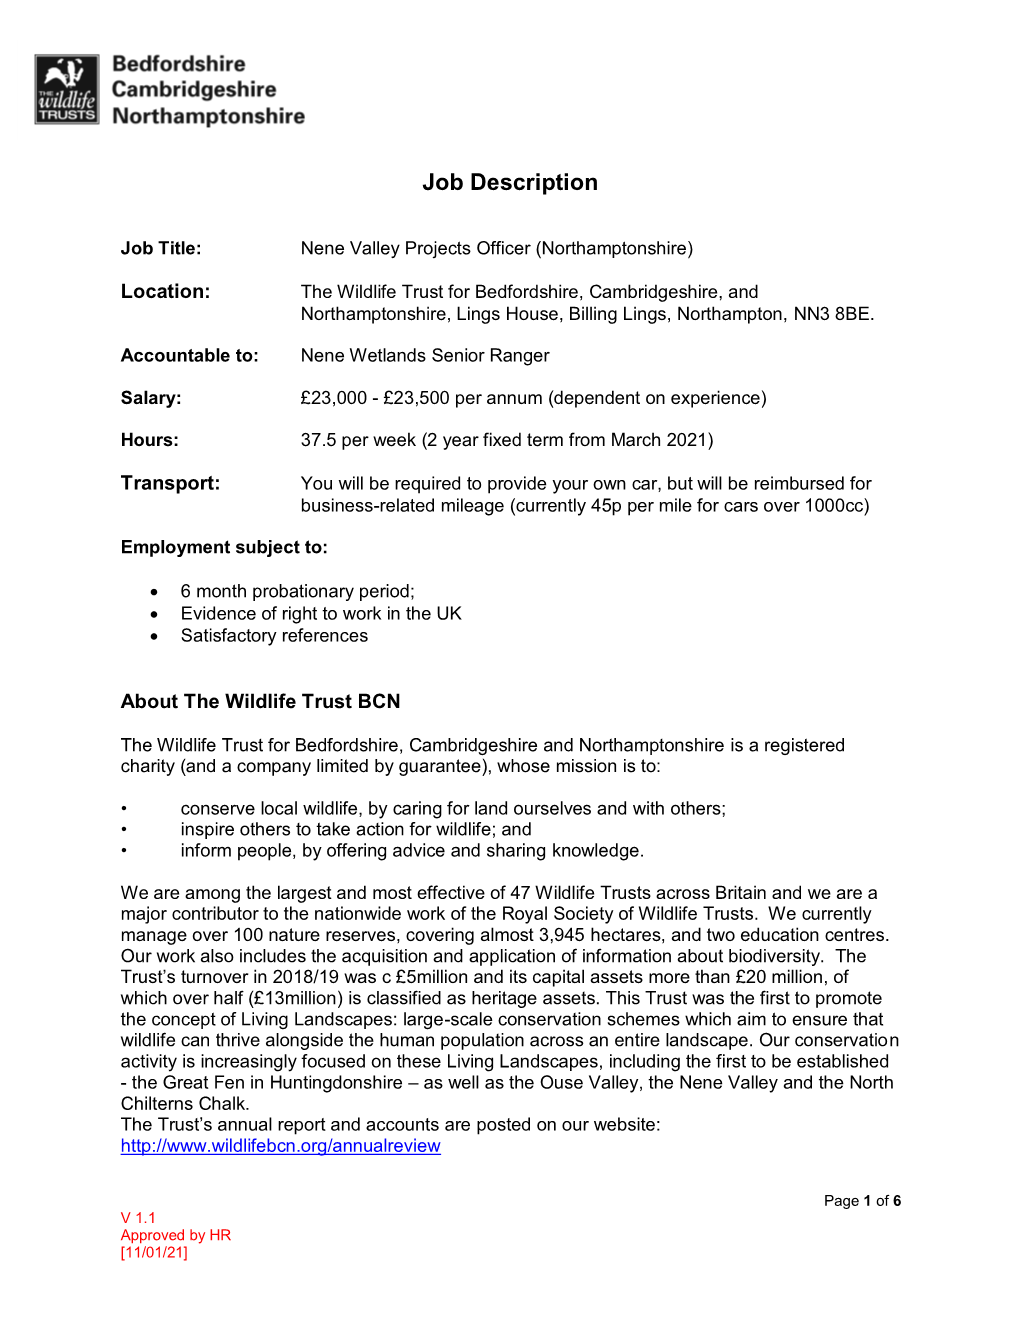 Nene Valley Project Officer Job Description.Pdf